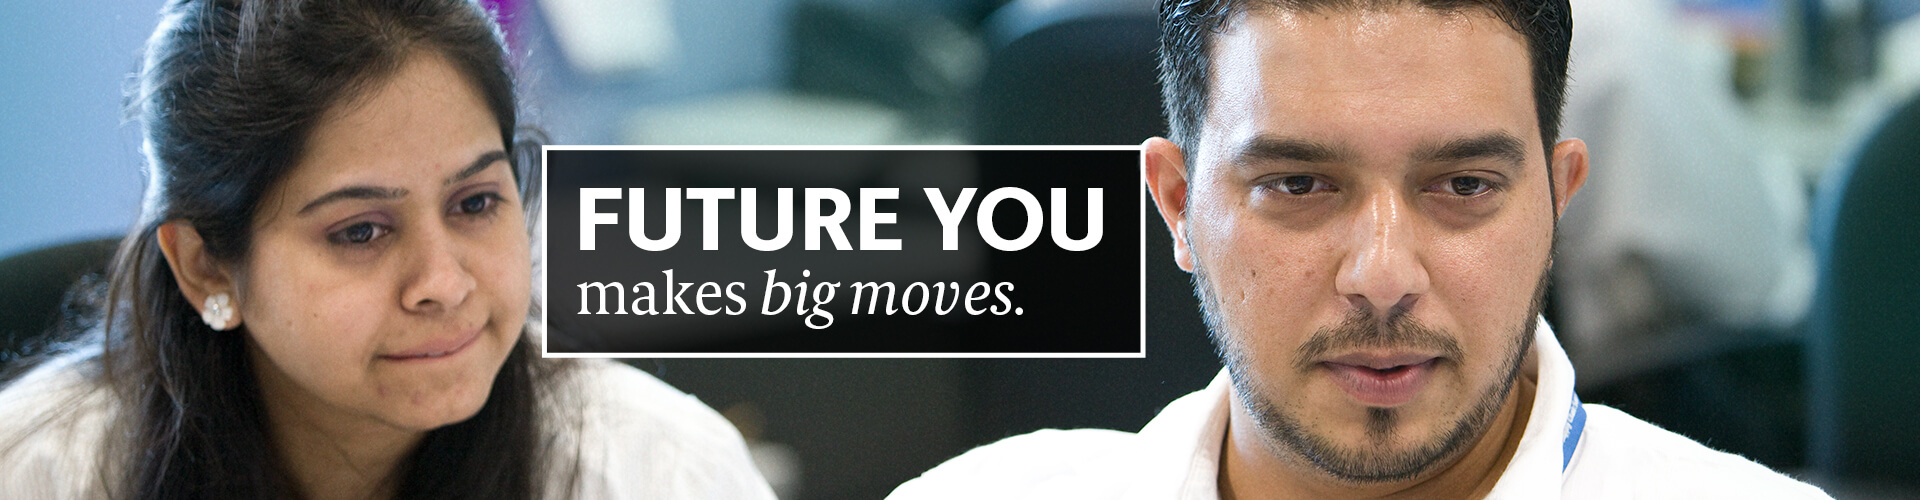 FUTURE YOU makes big moves.